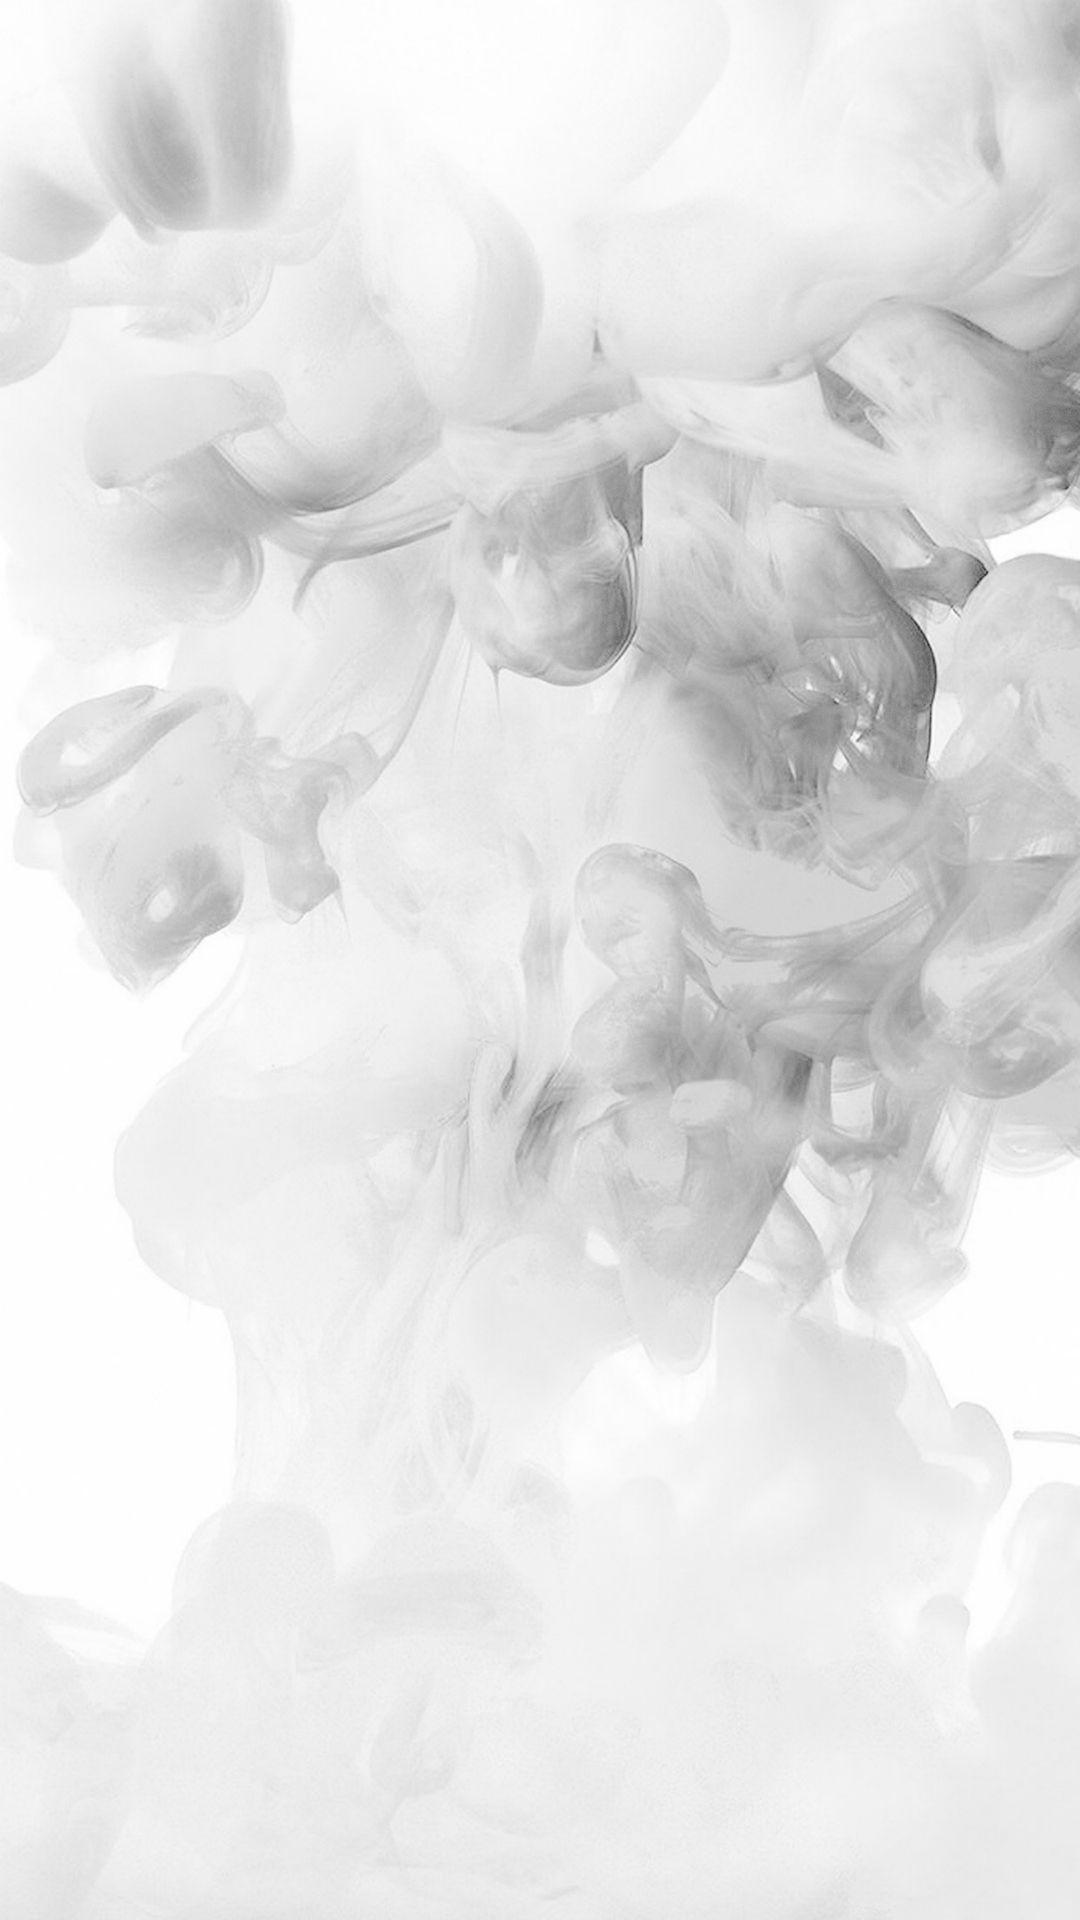 Smoke White Abstract Fog Art Illust iPhone 8 Wallpaper. iPhone